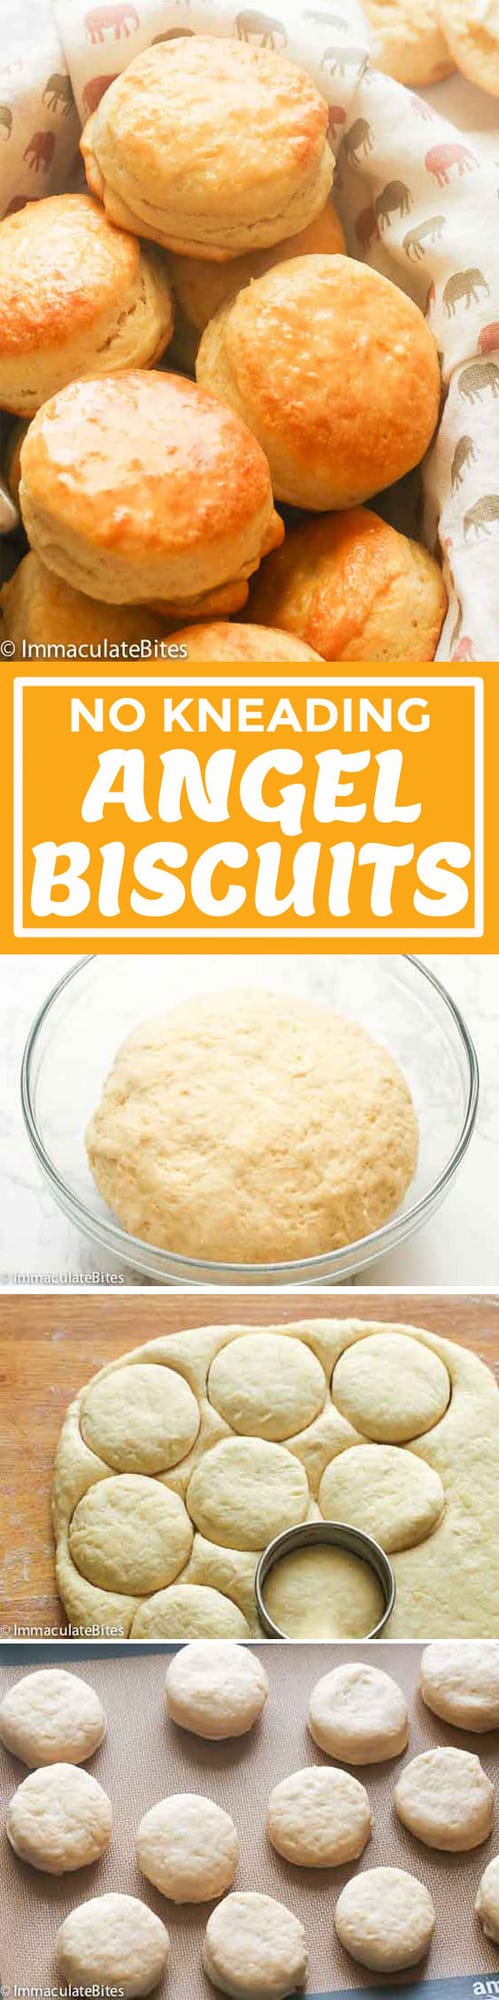 Angel Biscuits